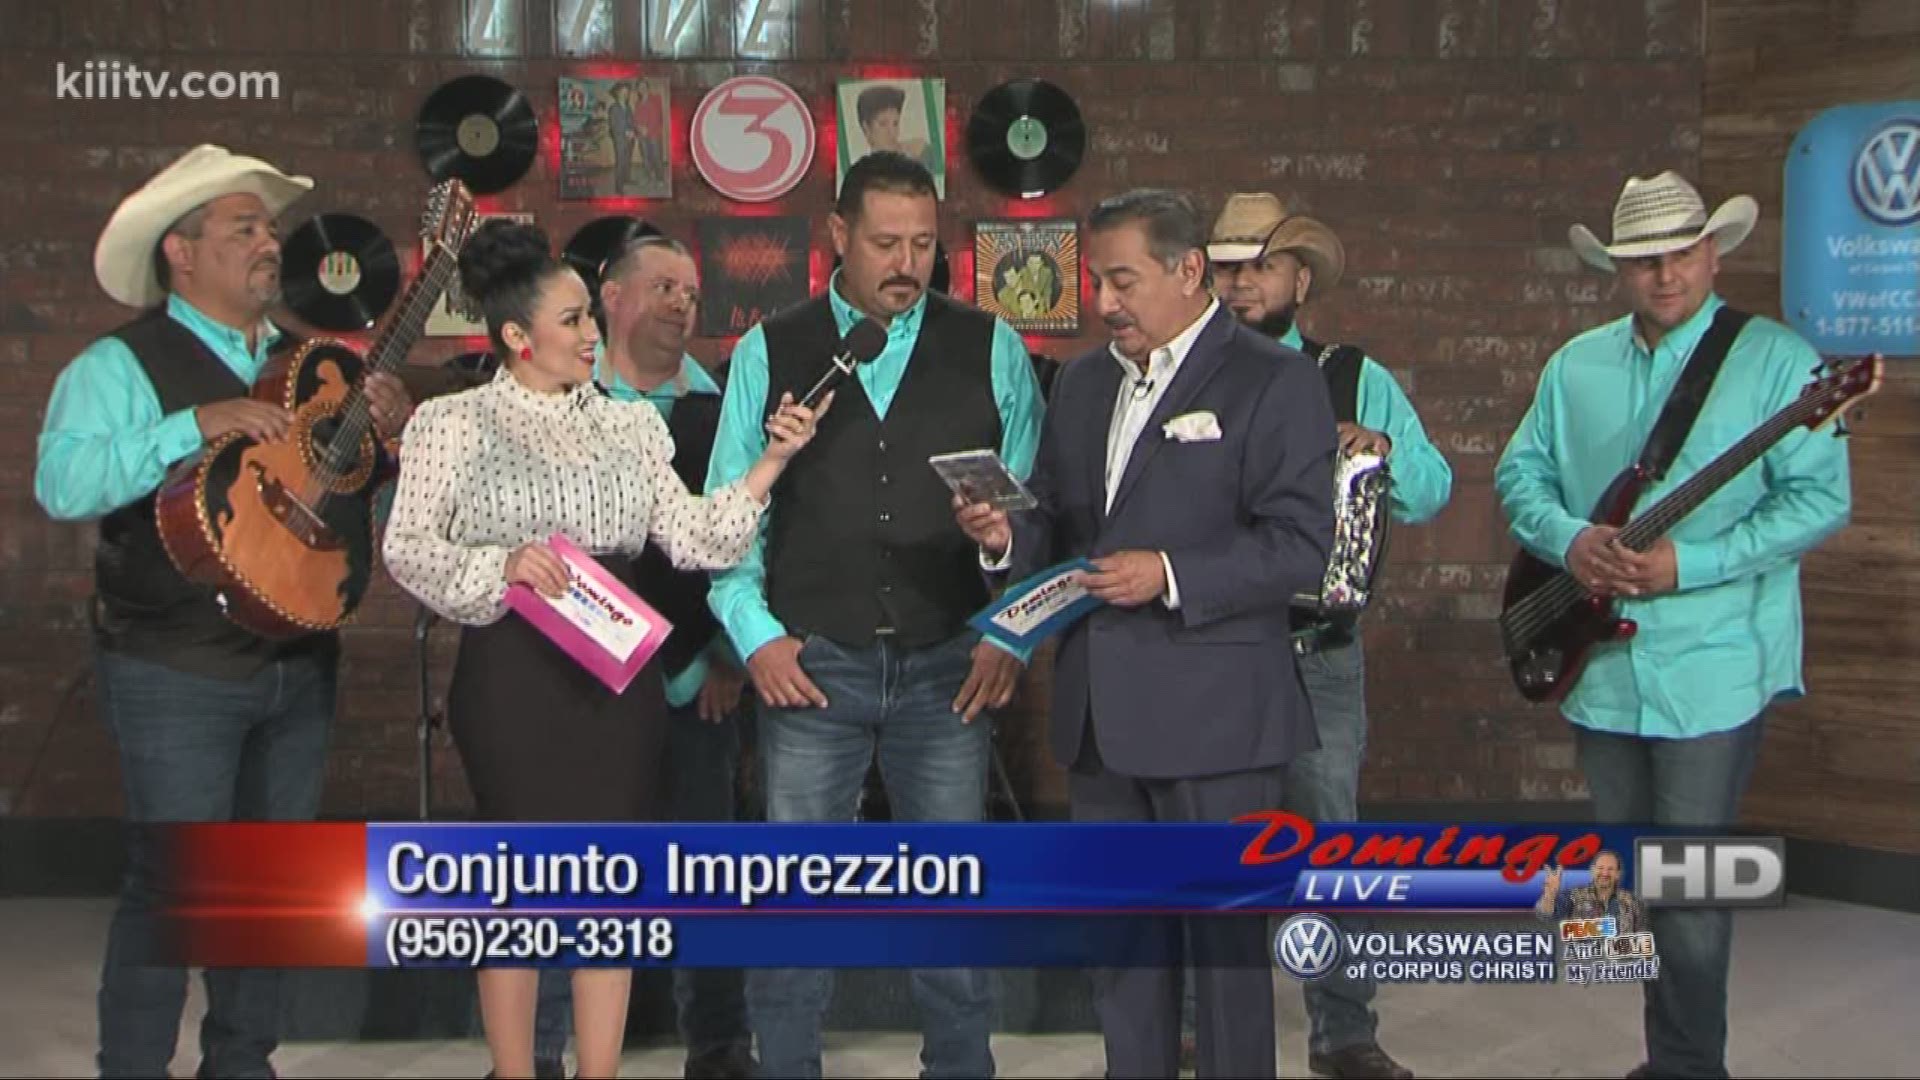 Conjunto Imprezzion Interviewing with Barbi Leo and Rudy Trevino on Domingo Live!